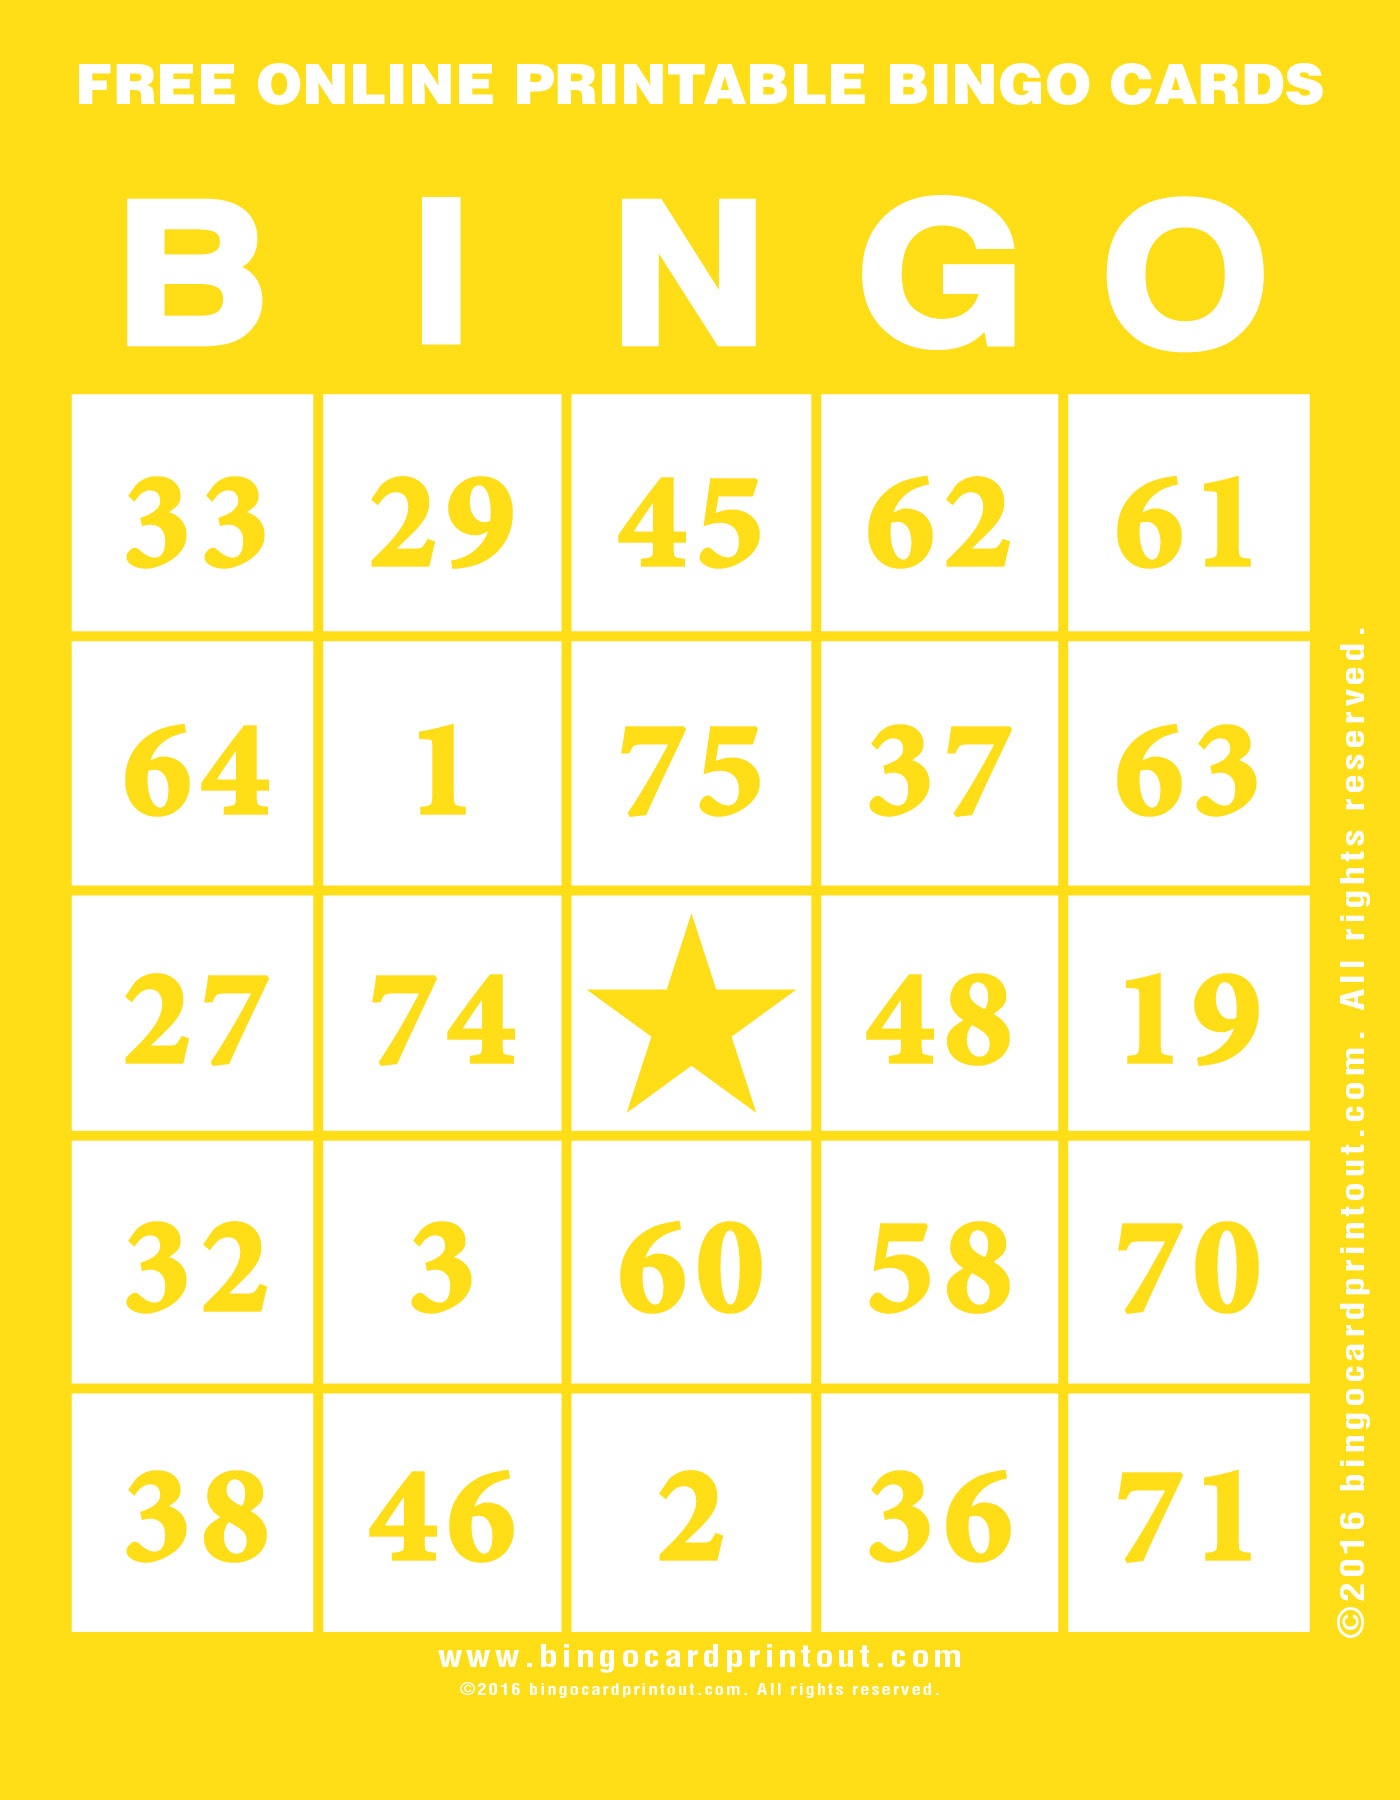 Free Online Printable Bingo Cards - Bingocardprintout - Free Printable Bingo Cards Random Numbers